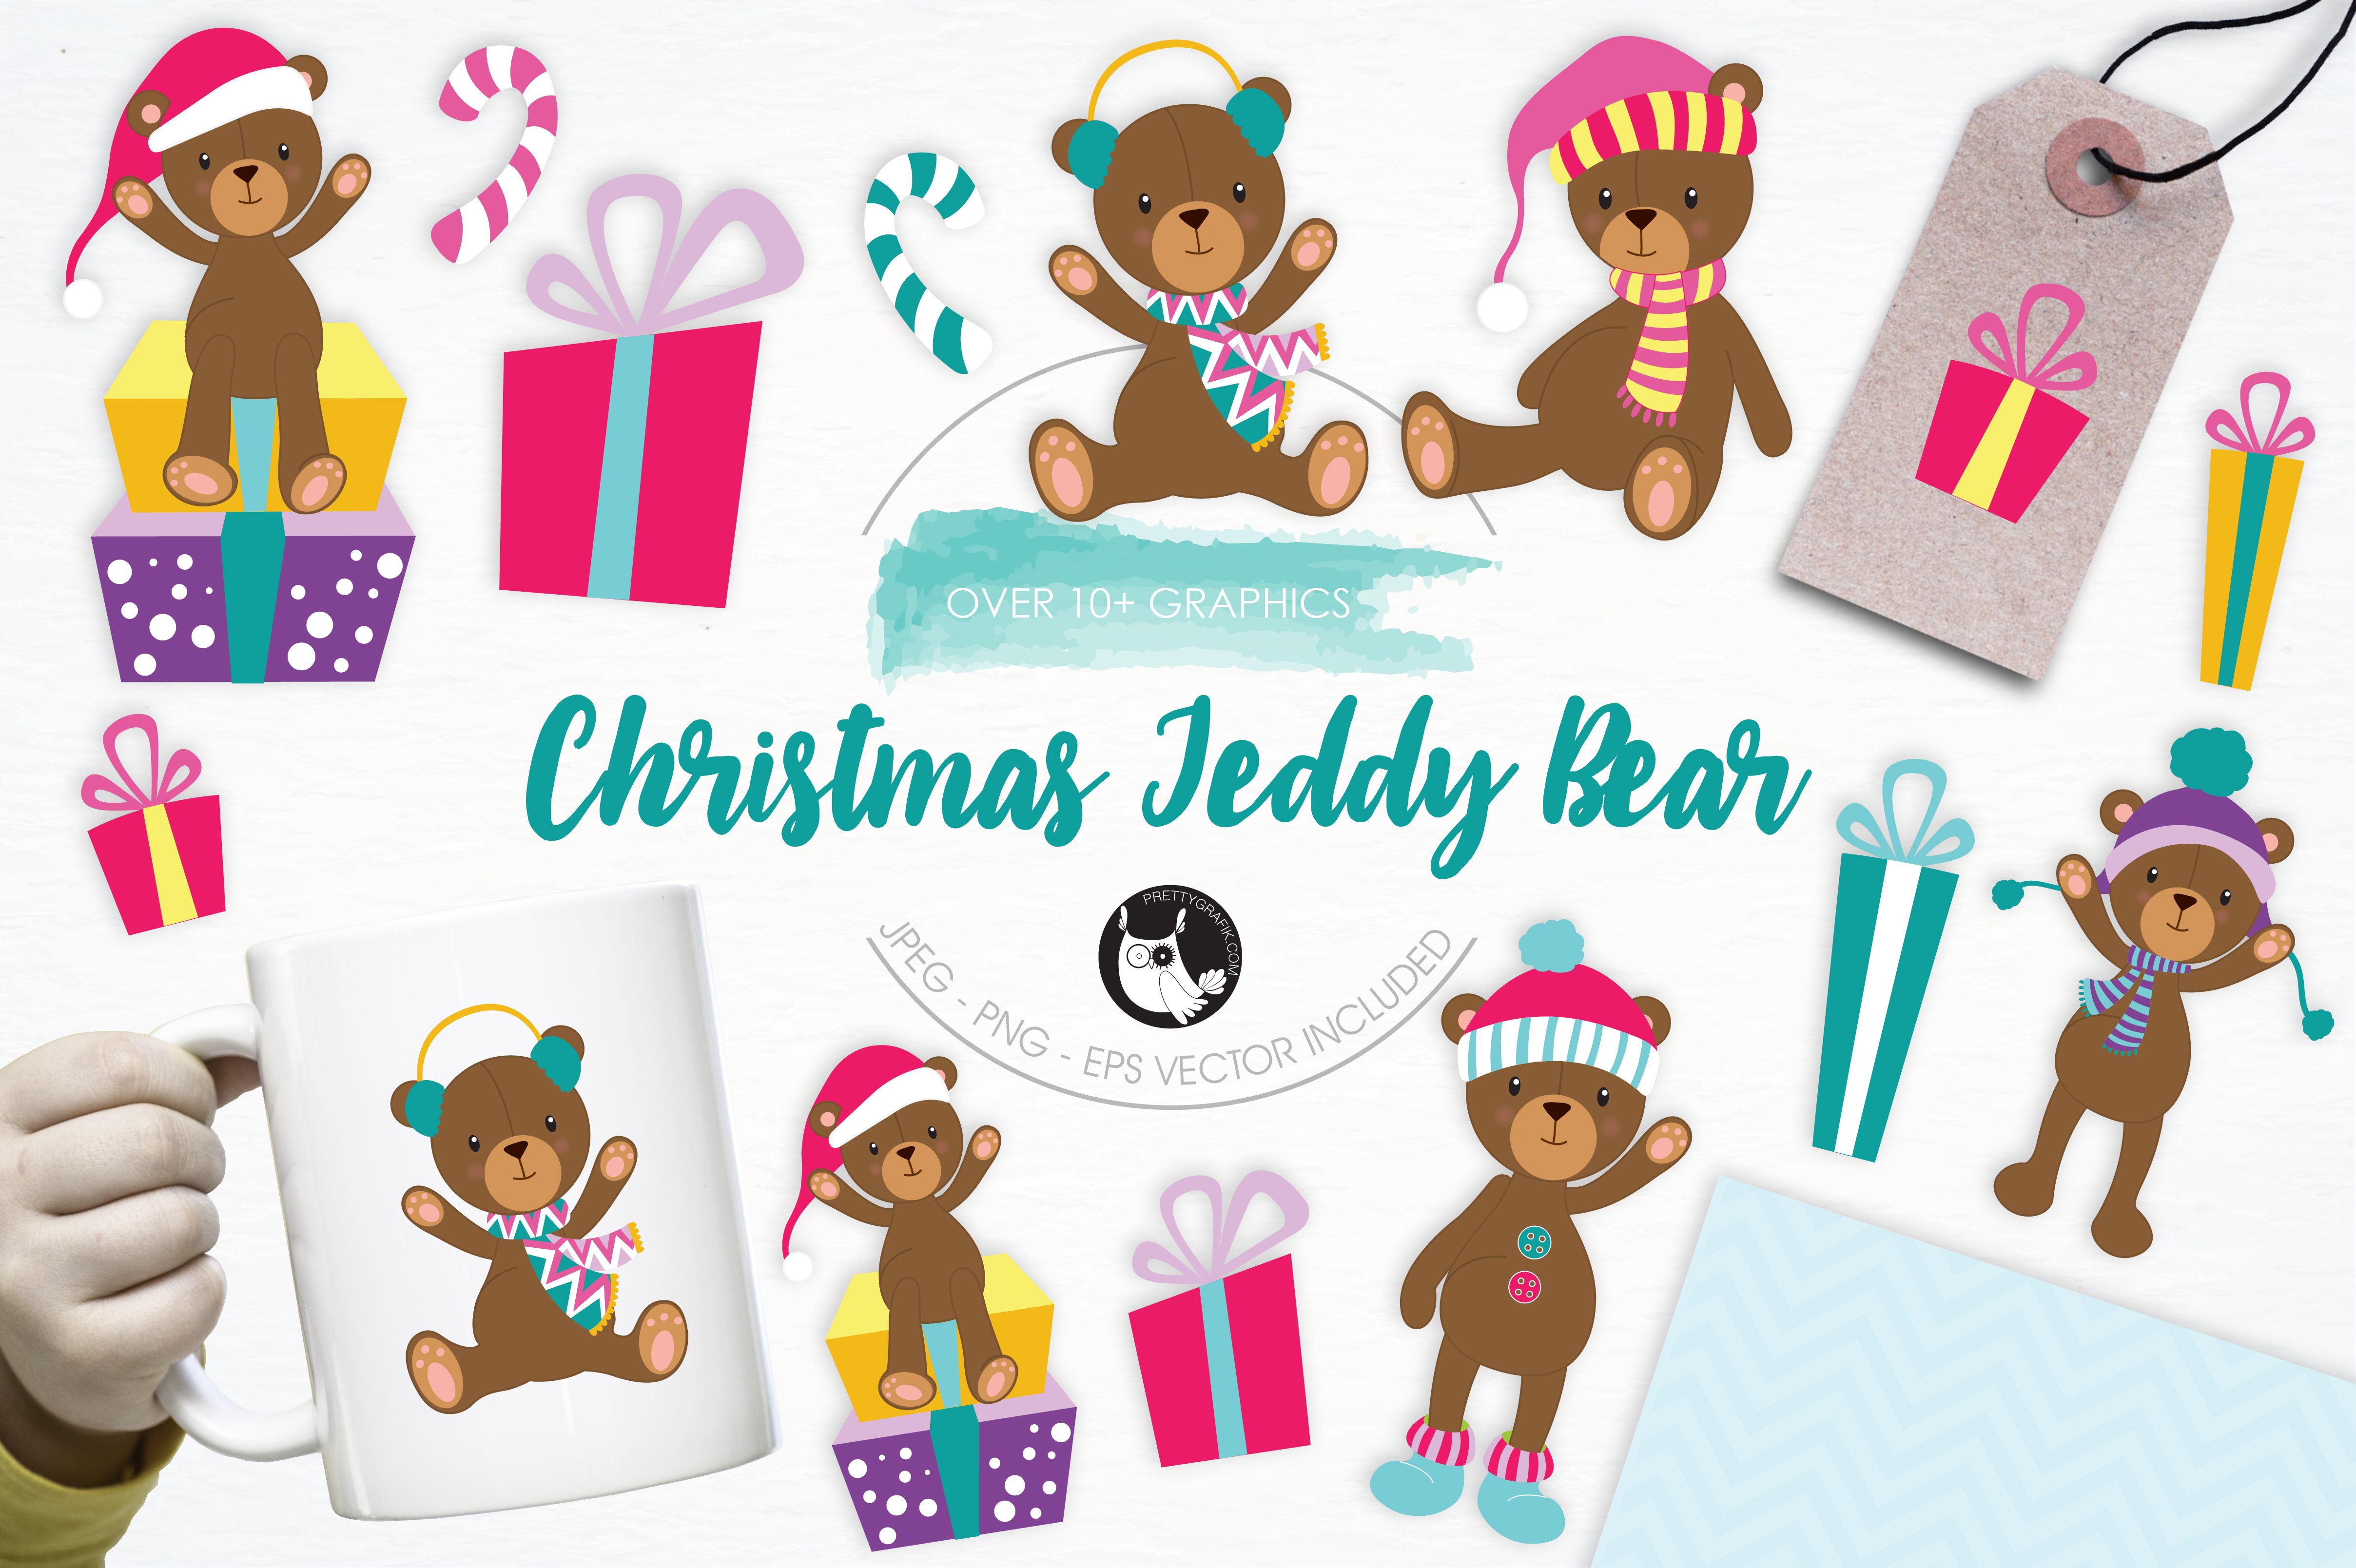 Christmas Teddy Bear illustrations - Vector Image